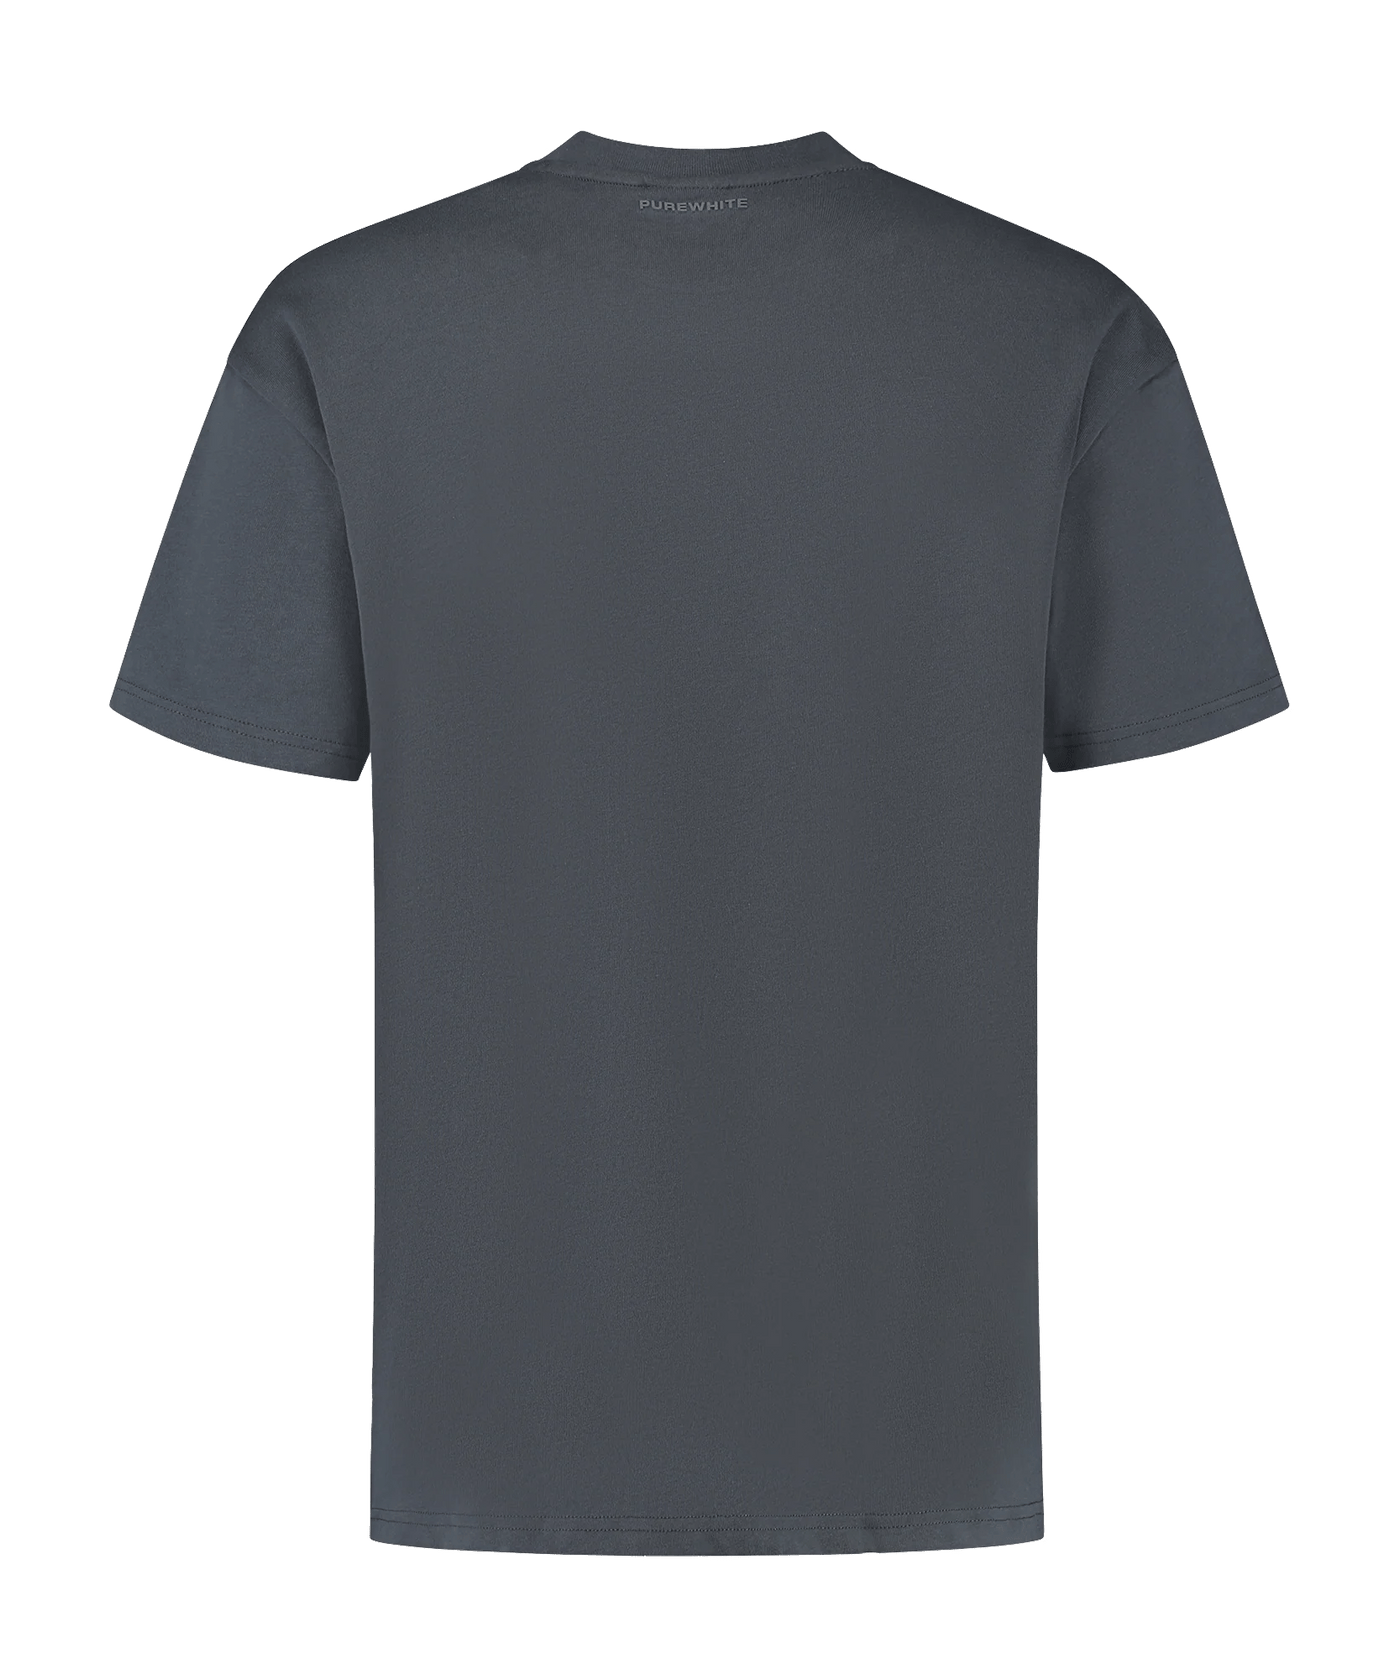 PureWhite - 23030104 - T-shirt - Antra